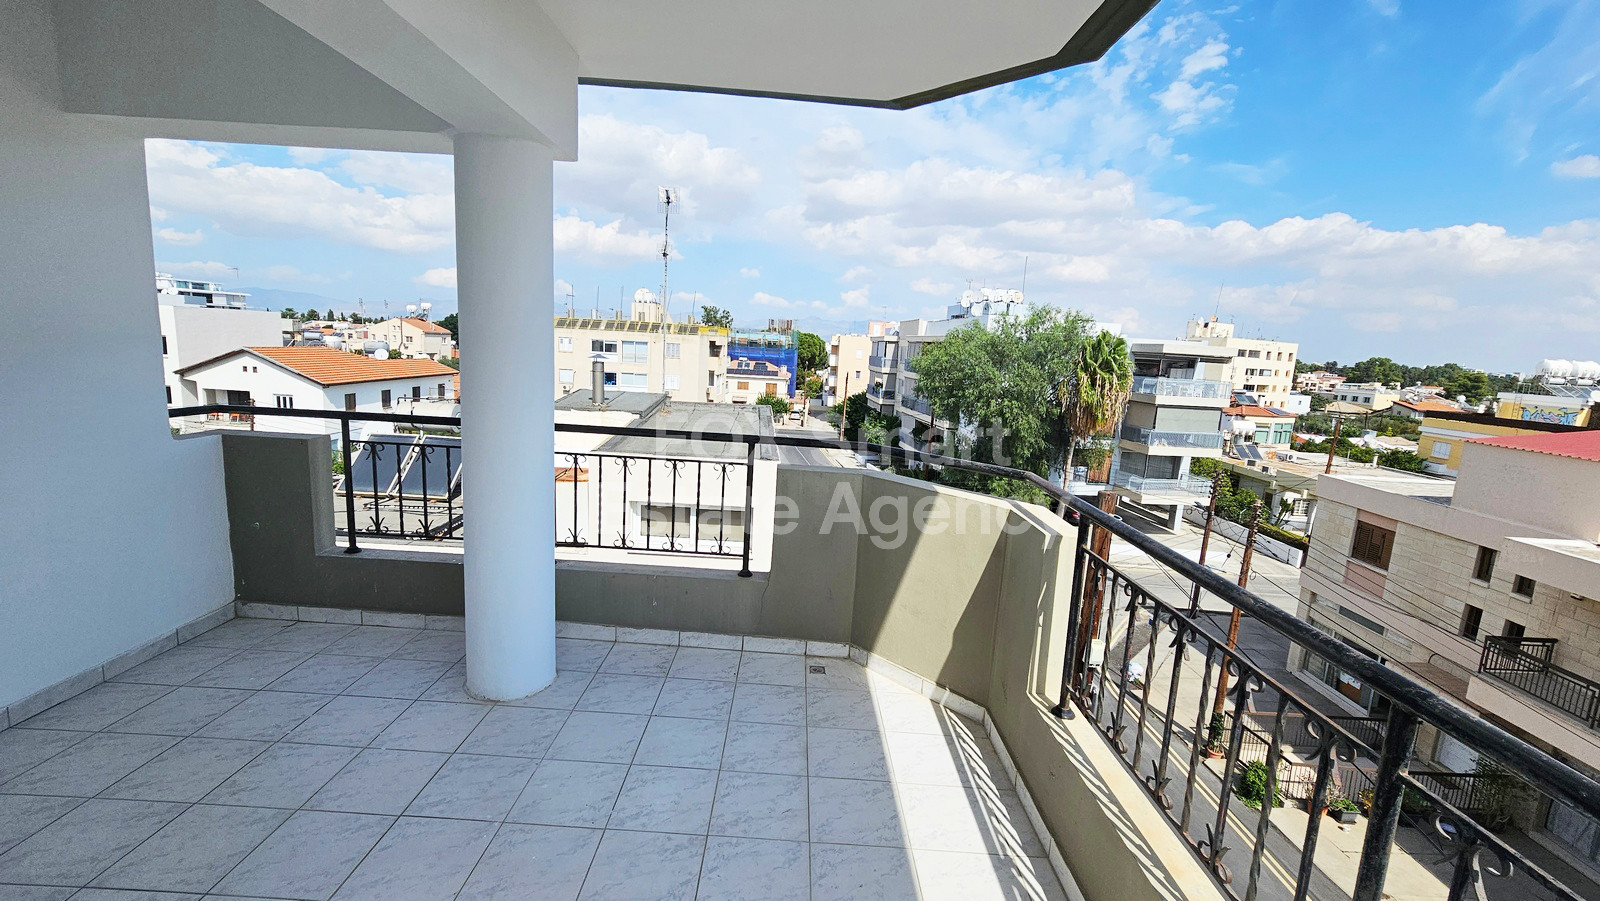 Apartment, For Sale, Nicosia, Strovolos  3 Bedrooms 2 Bathro.....